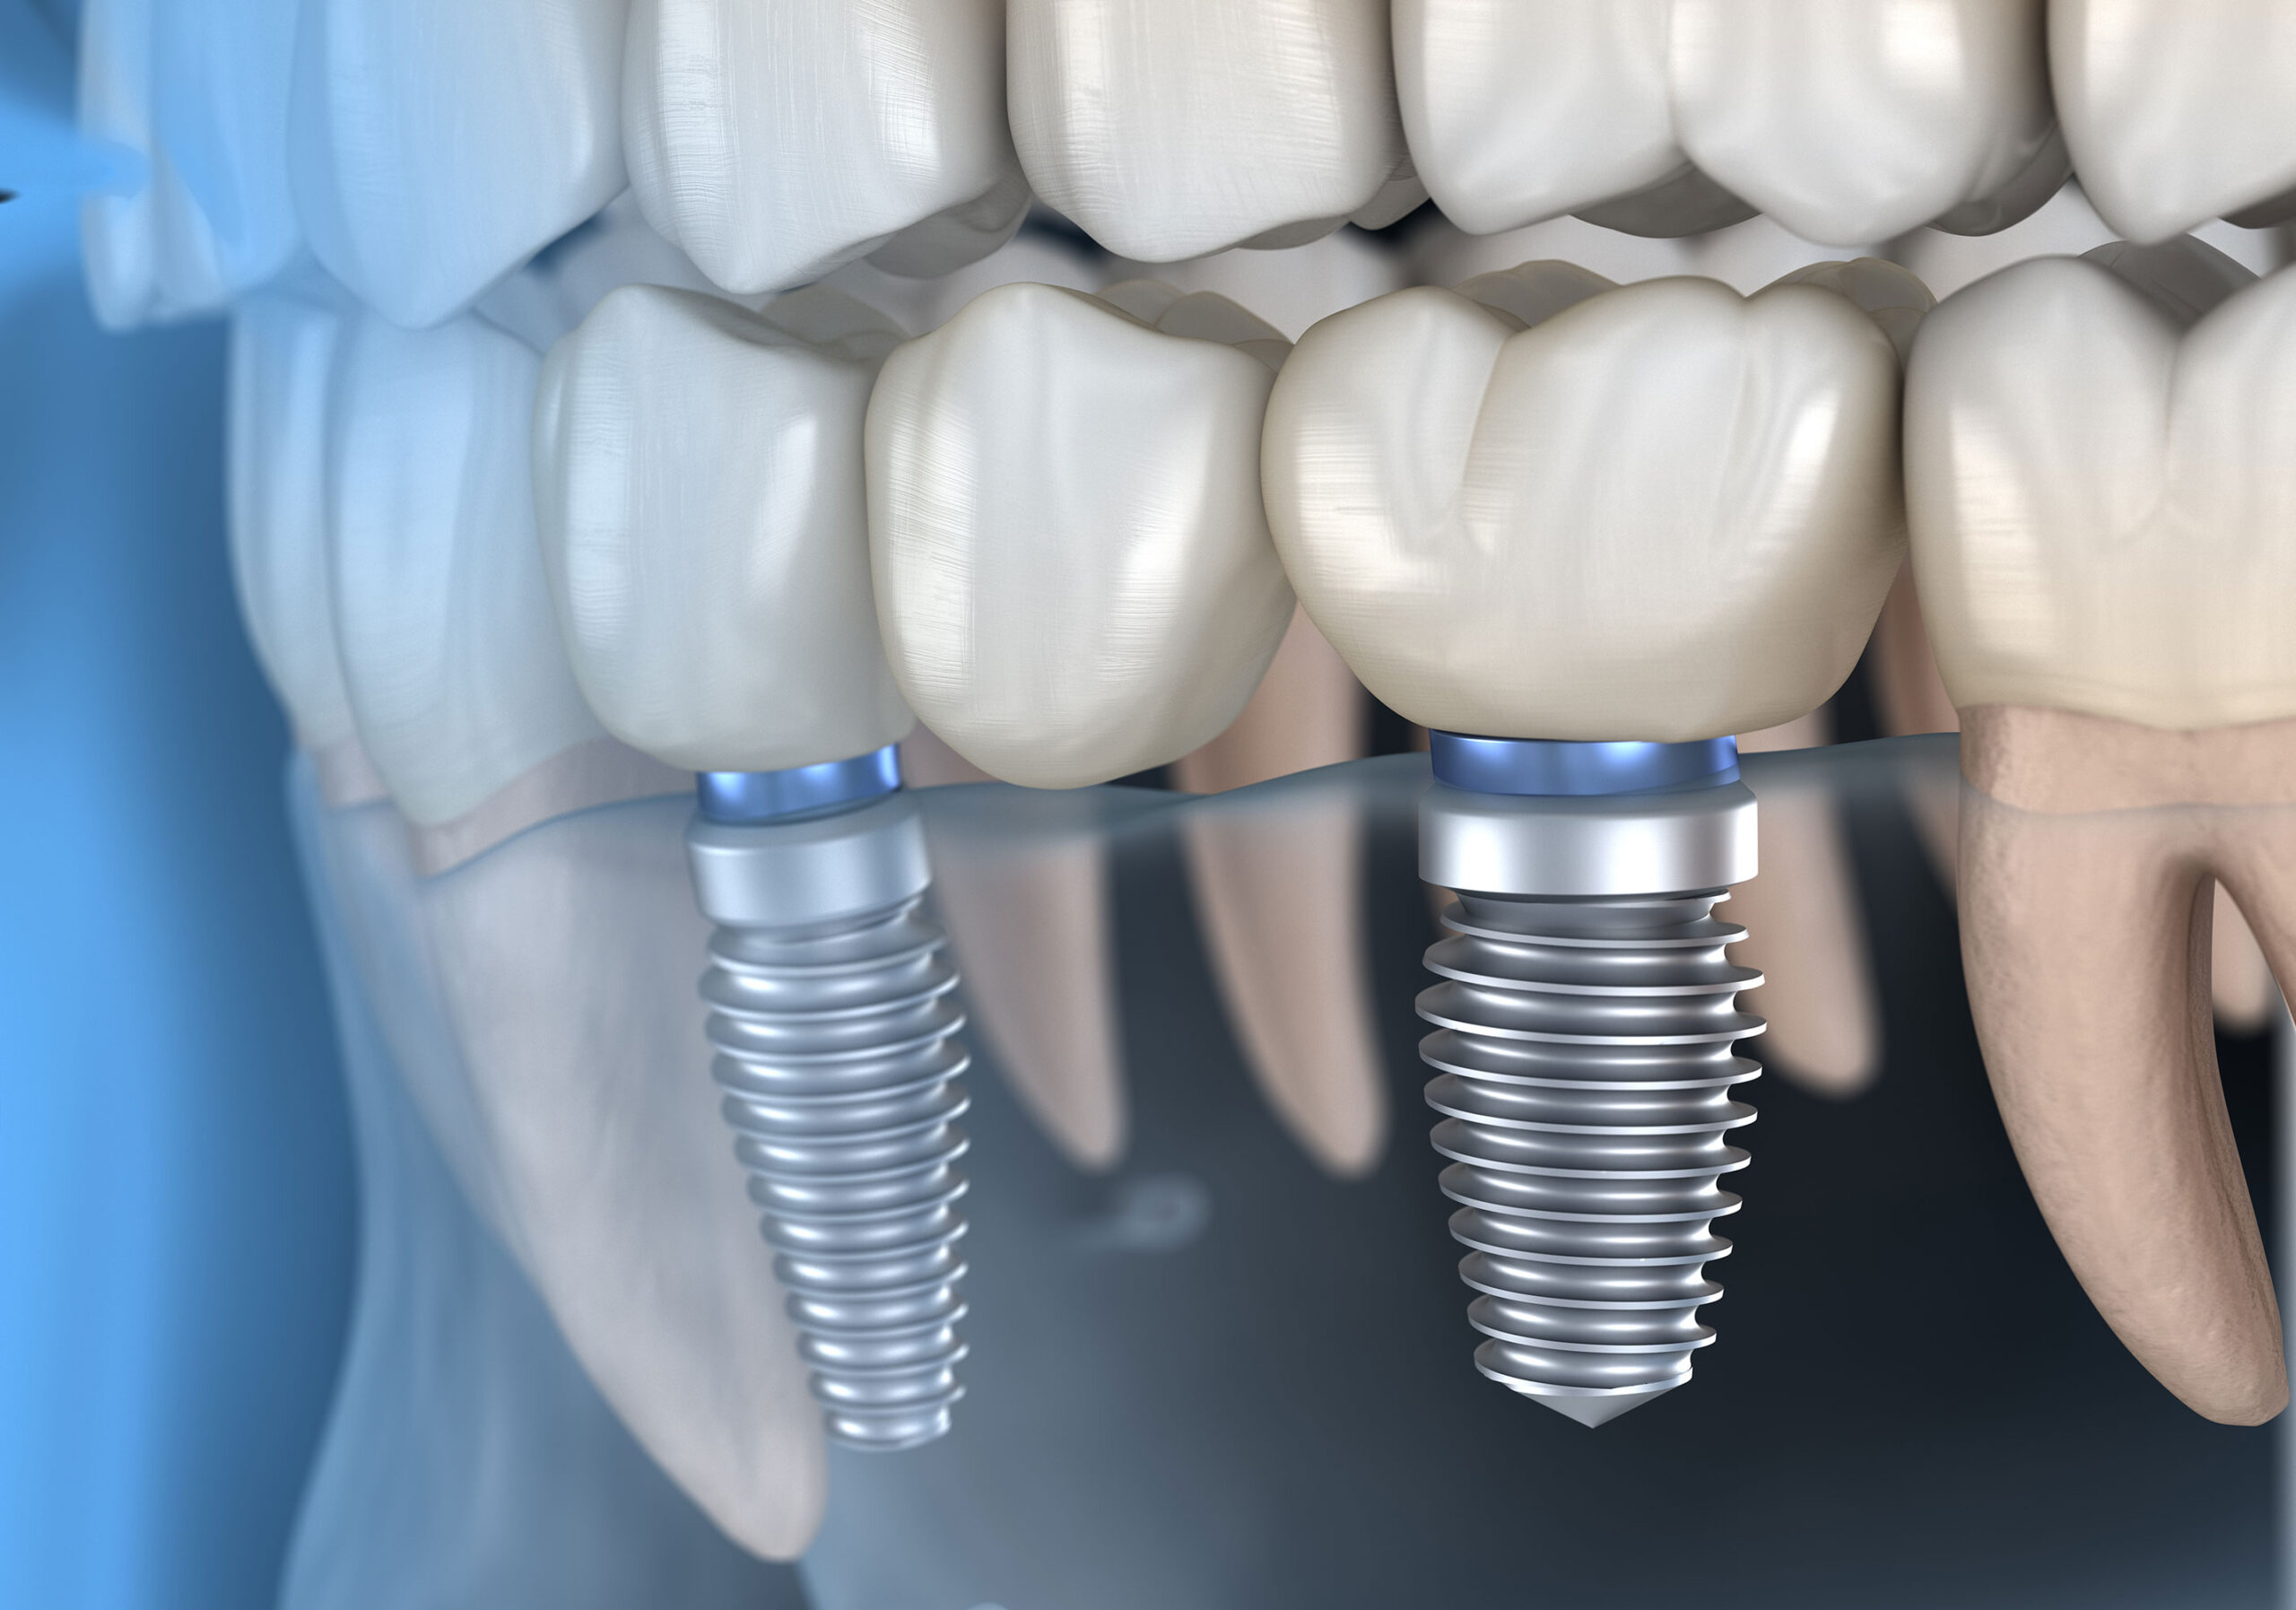 https://lynton.expressionsdental.co.uk/wp-content/uploads/2022/09/dental-implants-scaled.jpg